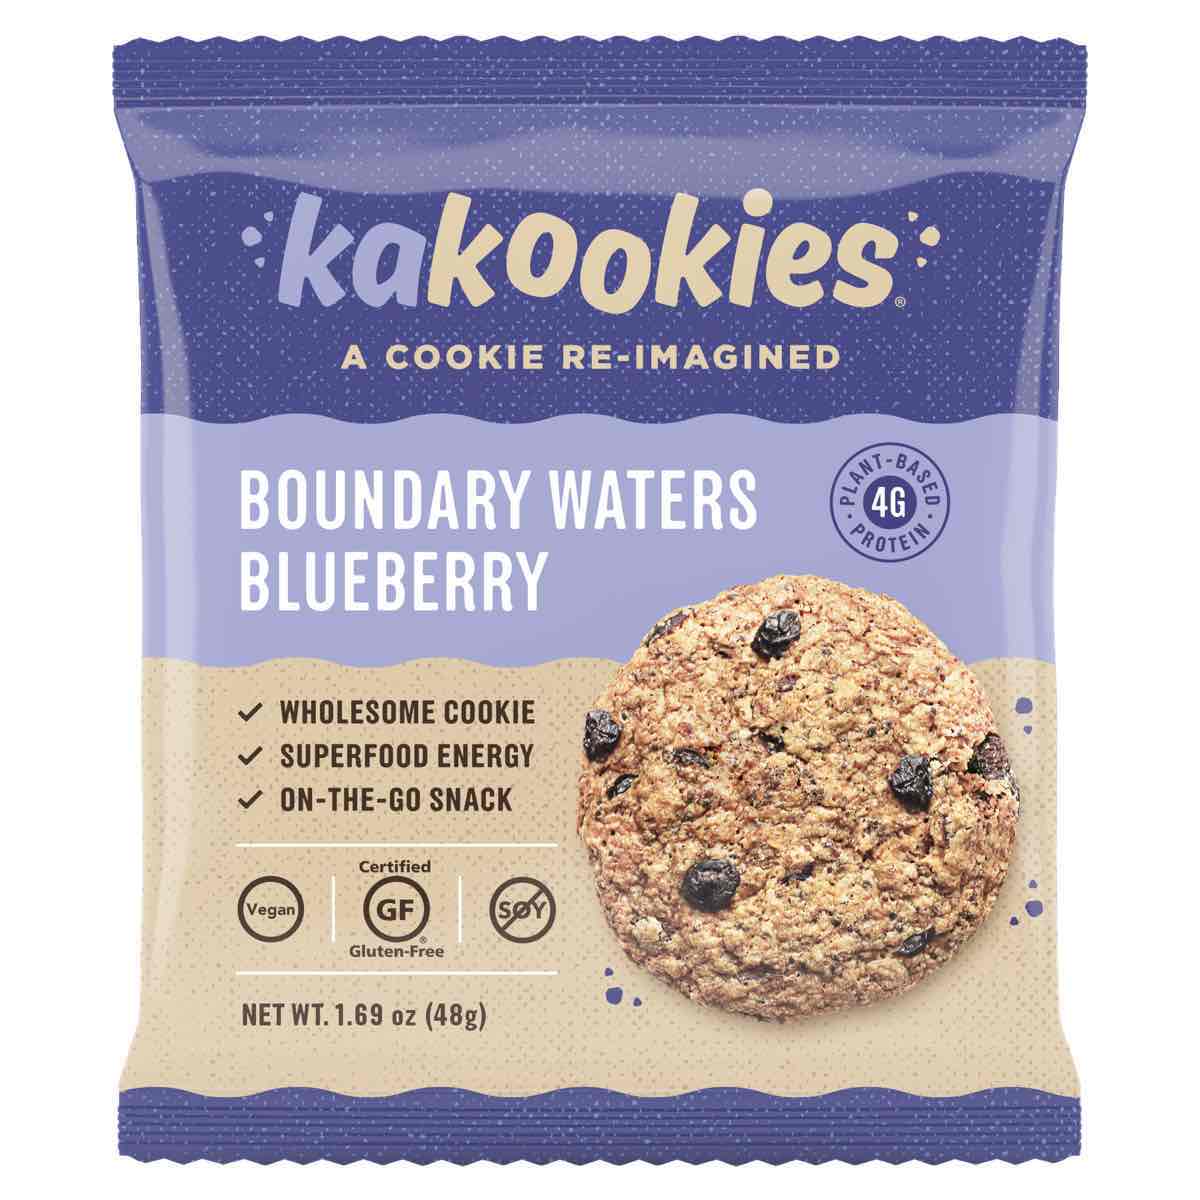 Boundary Waters Blueberry Kakookies